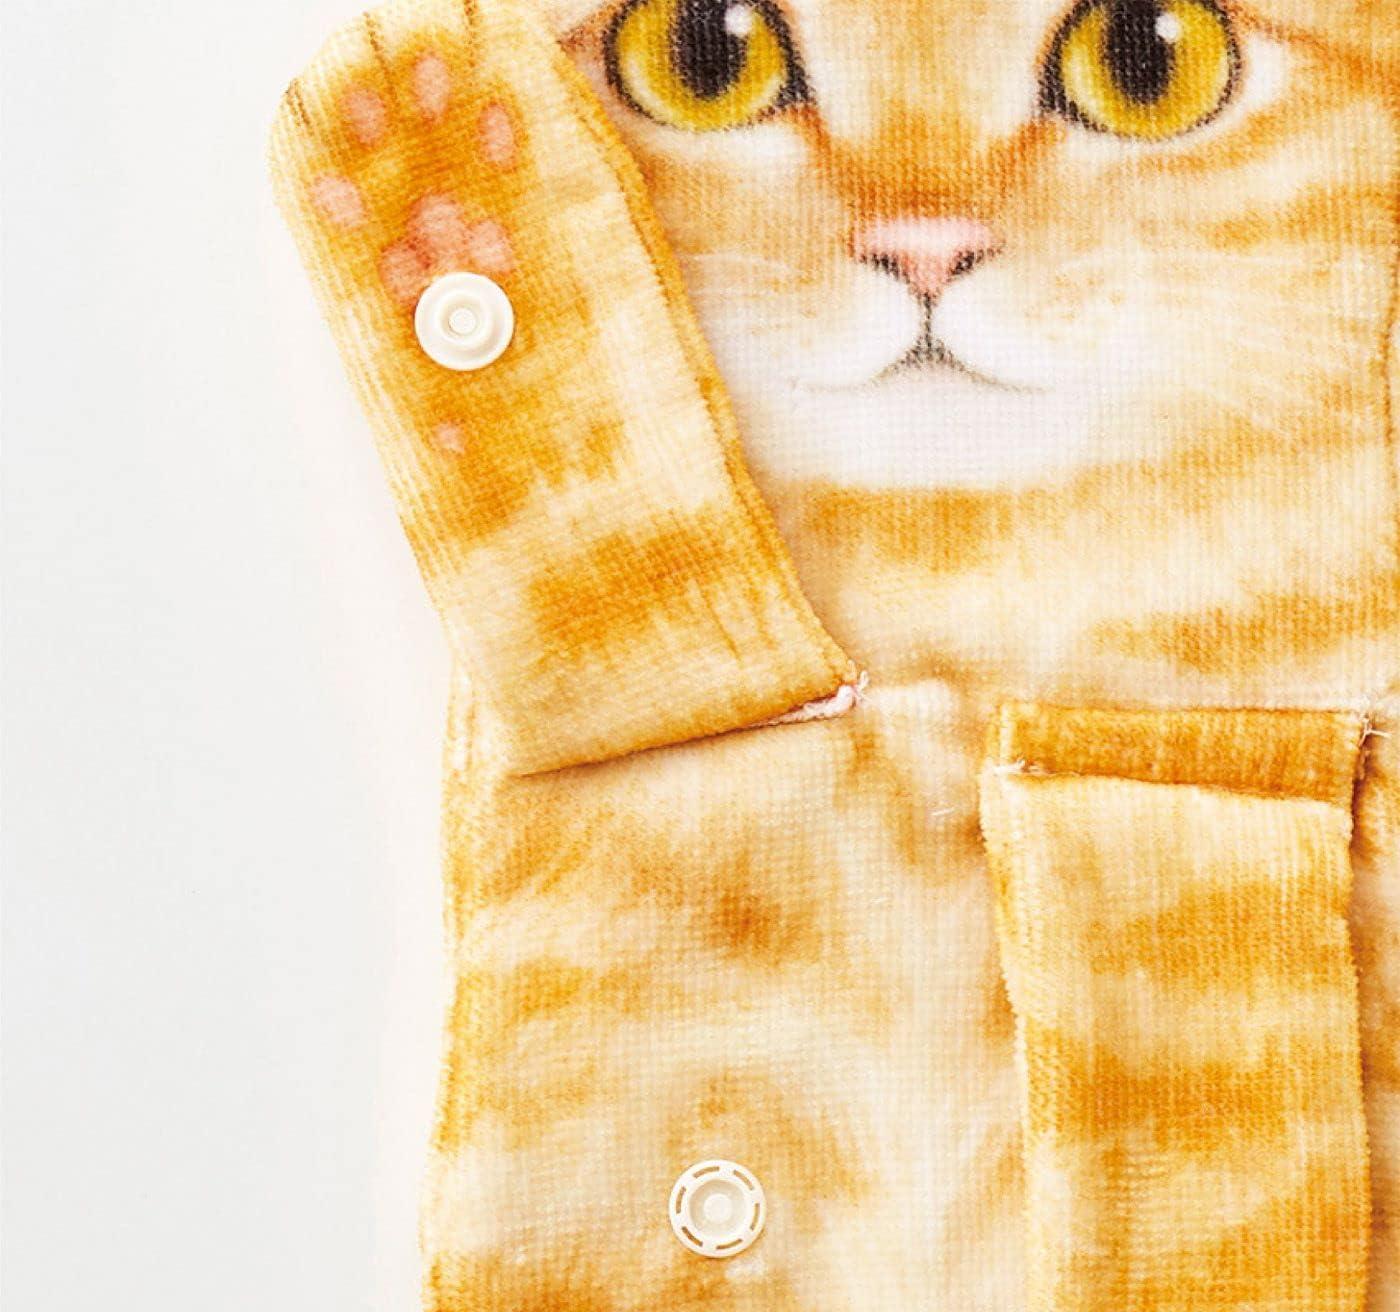 Cat Funny Hand Towels for Bathroom Kitchen - Cute Decorative Cat